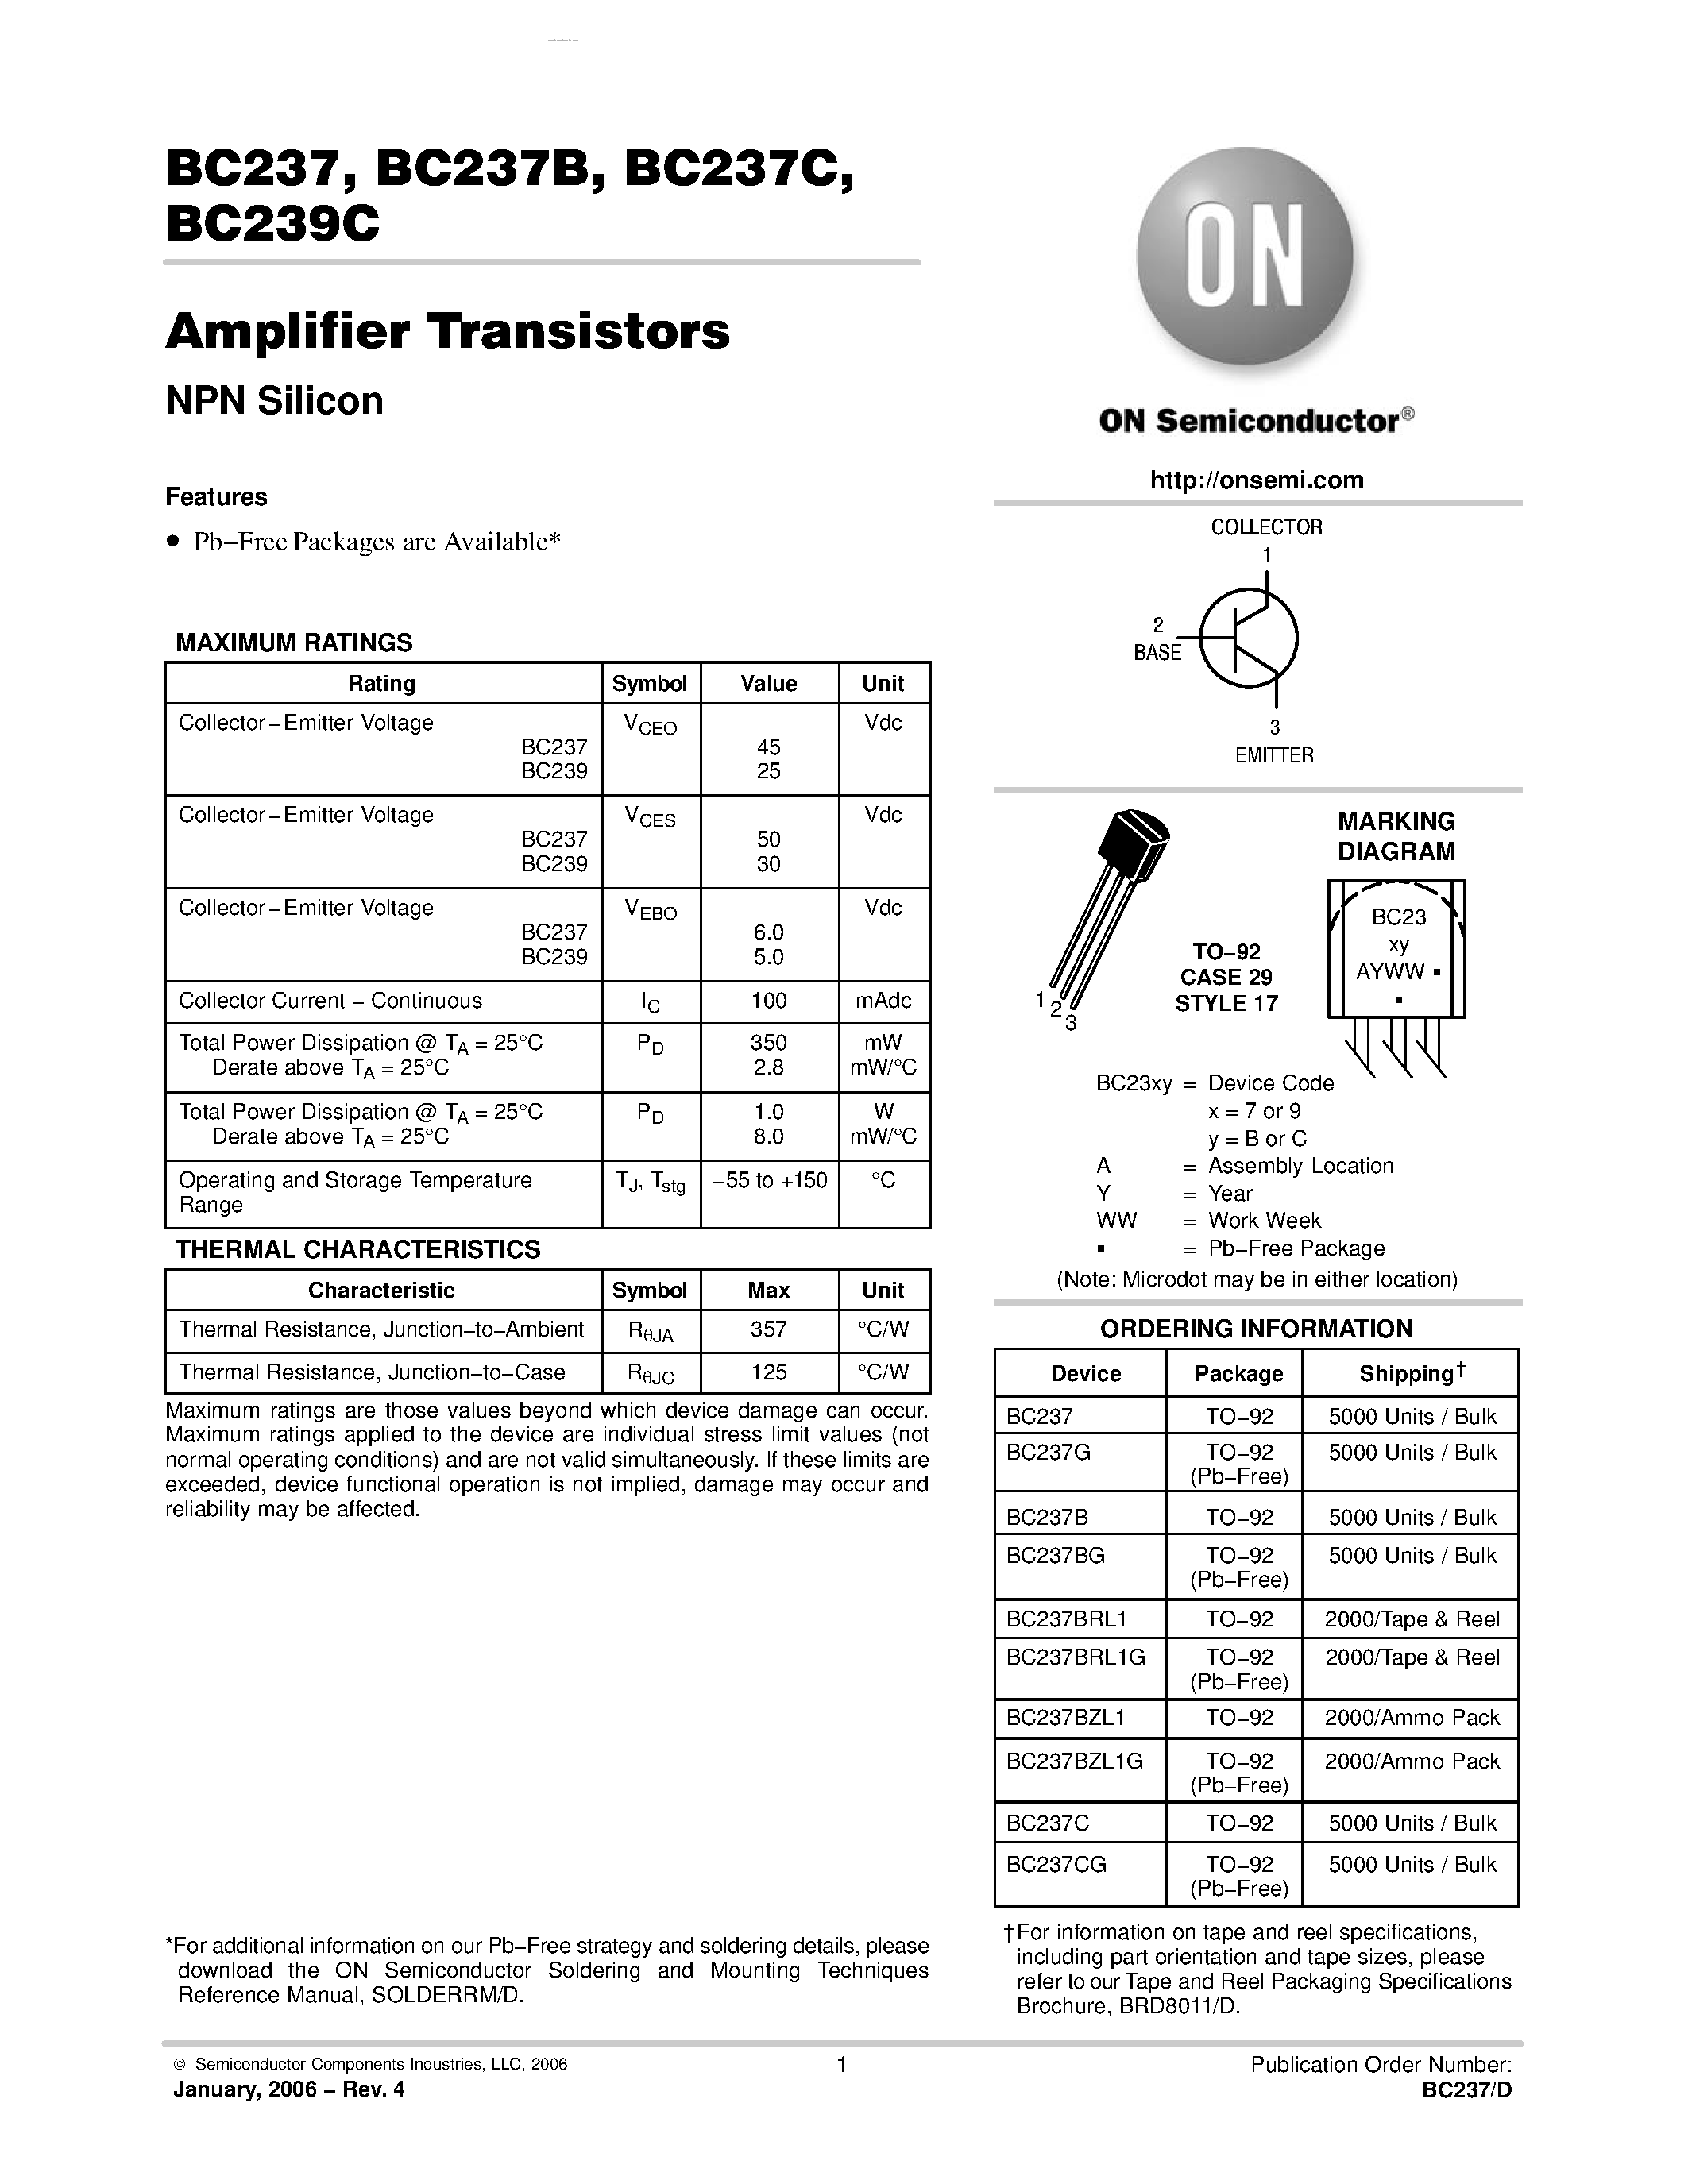 Даташит BC239C - Amplifier Transistors(NPN Silicon) страница 1